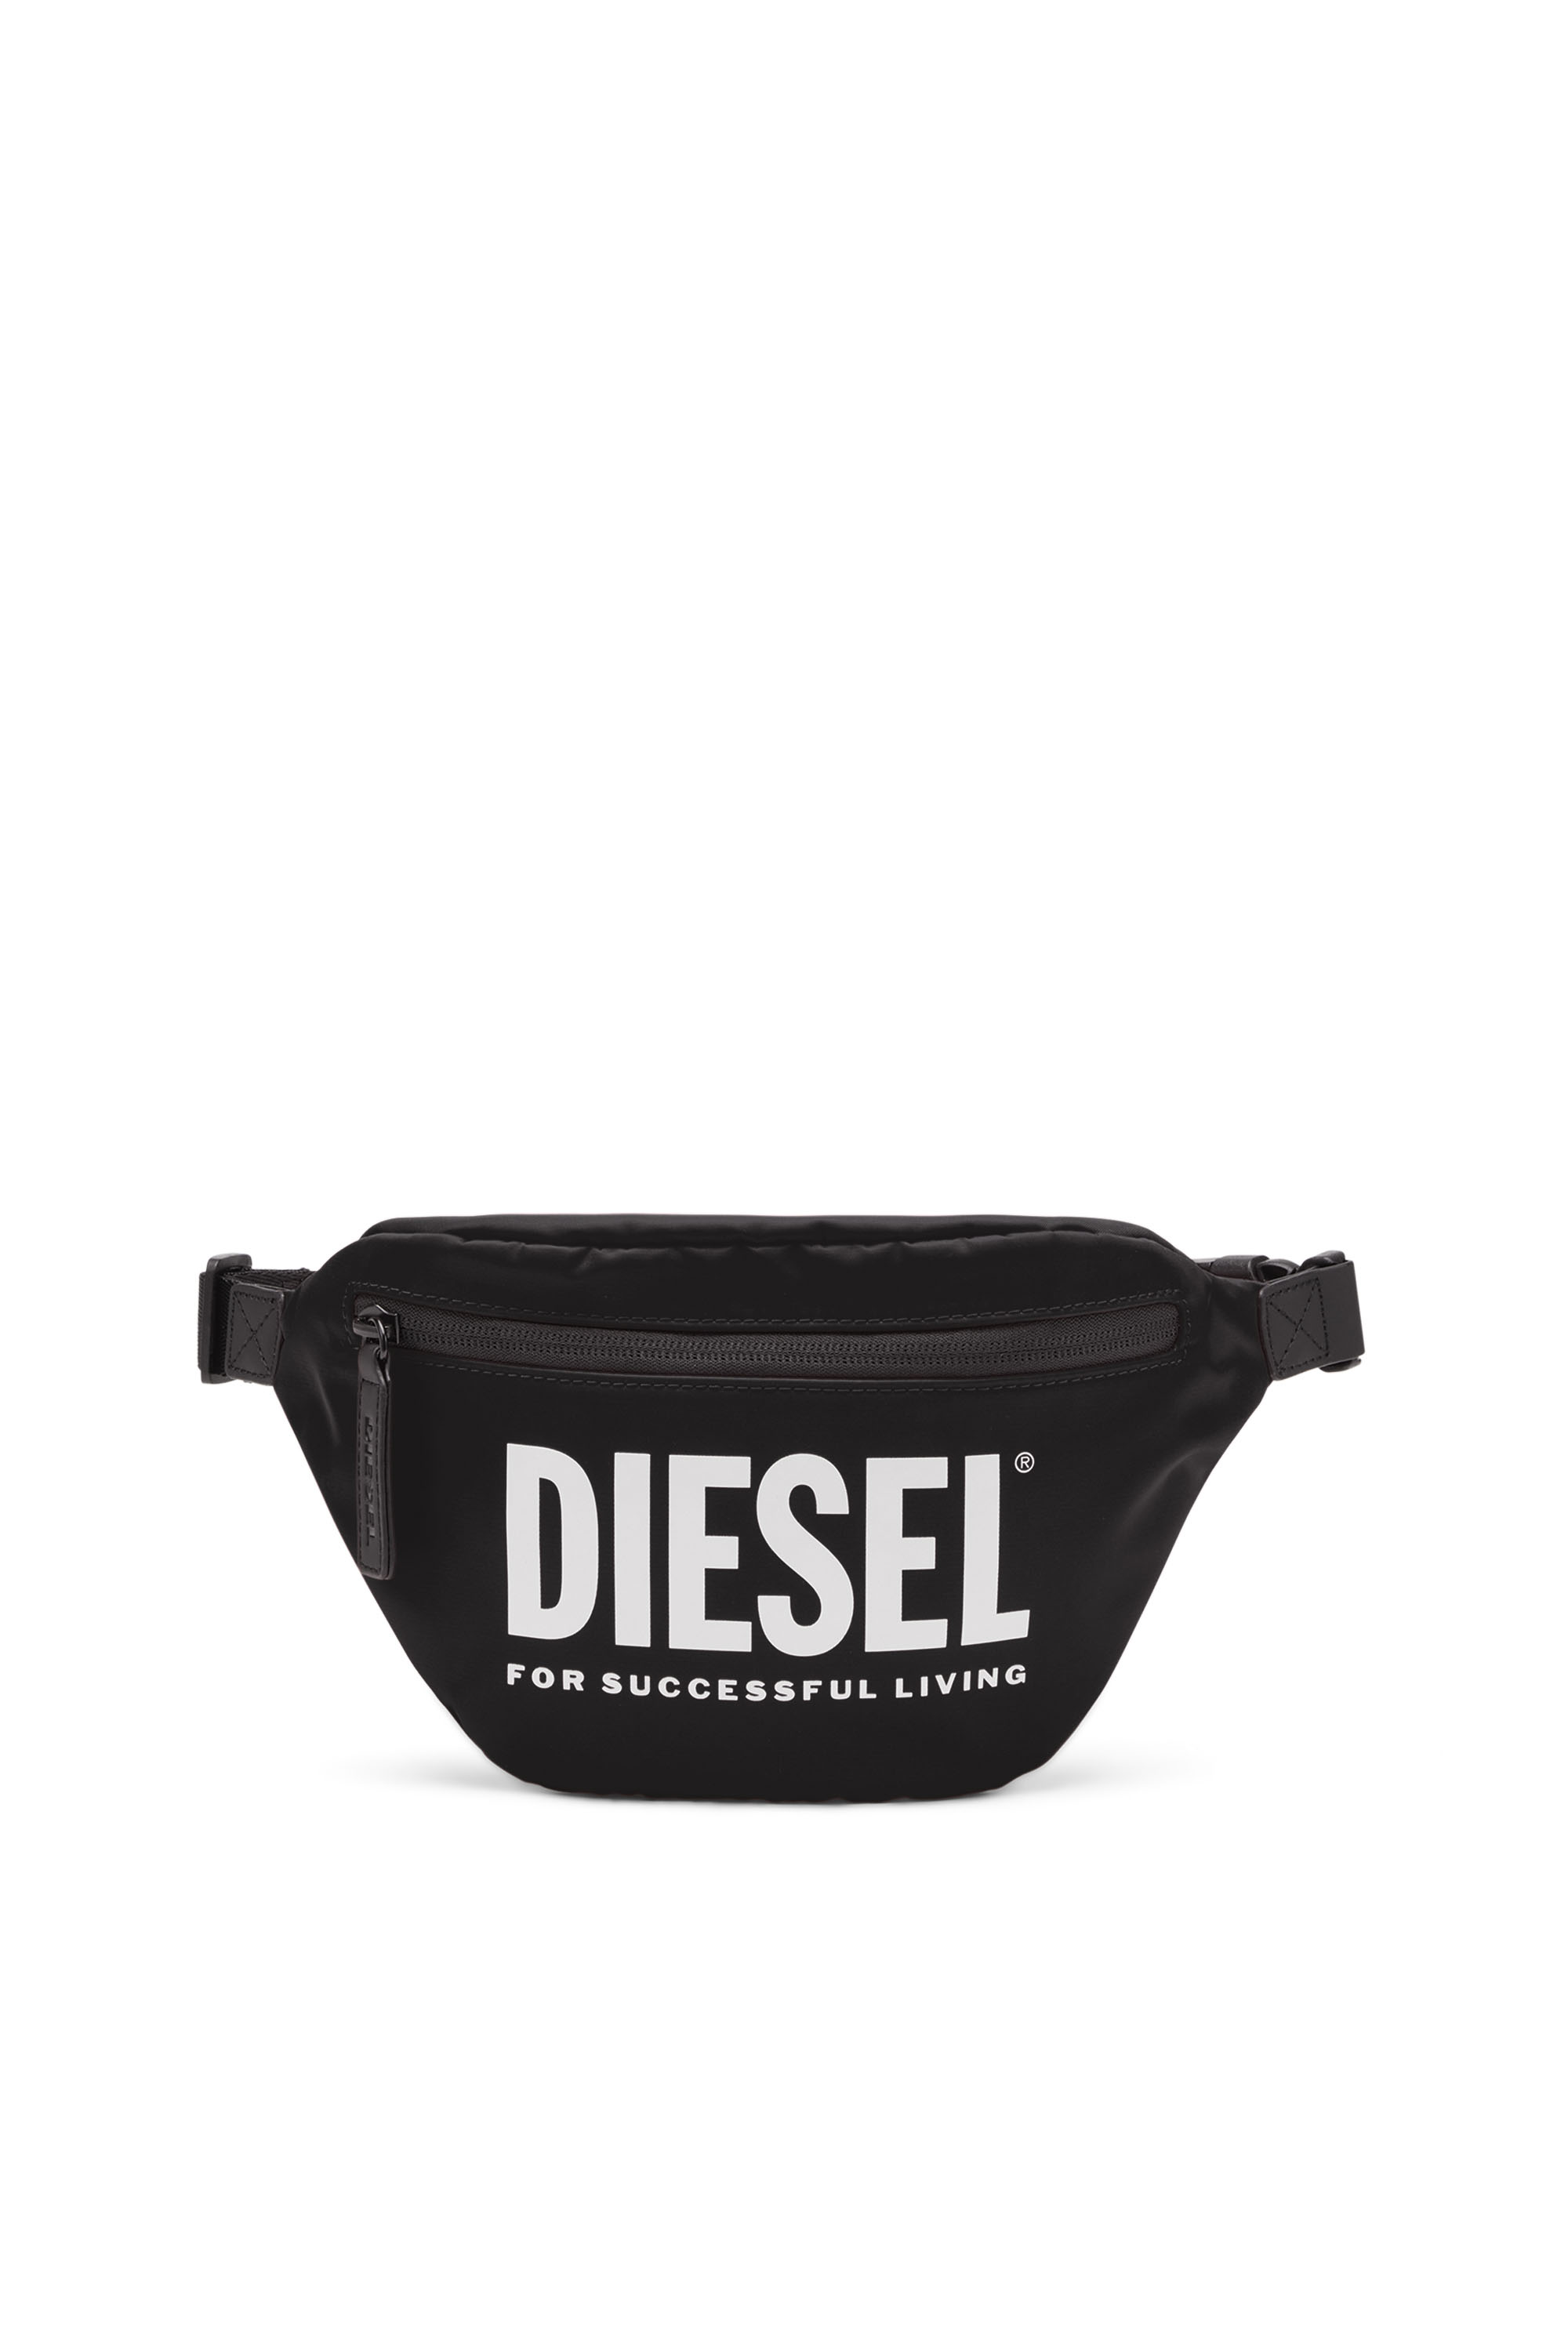 Diesel - WPOUCHLOGO, Black - Image 1